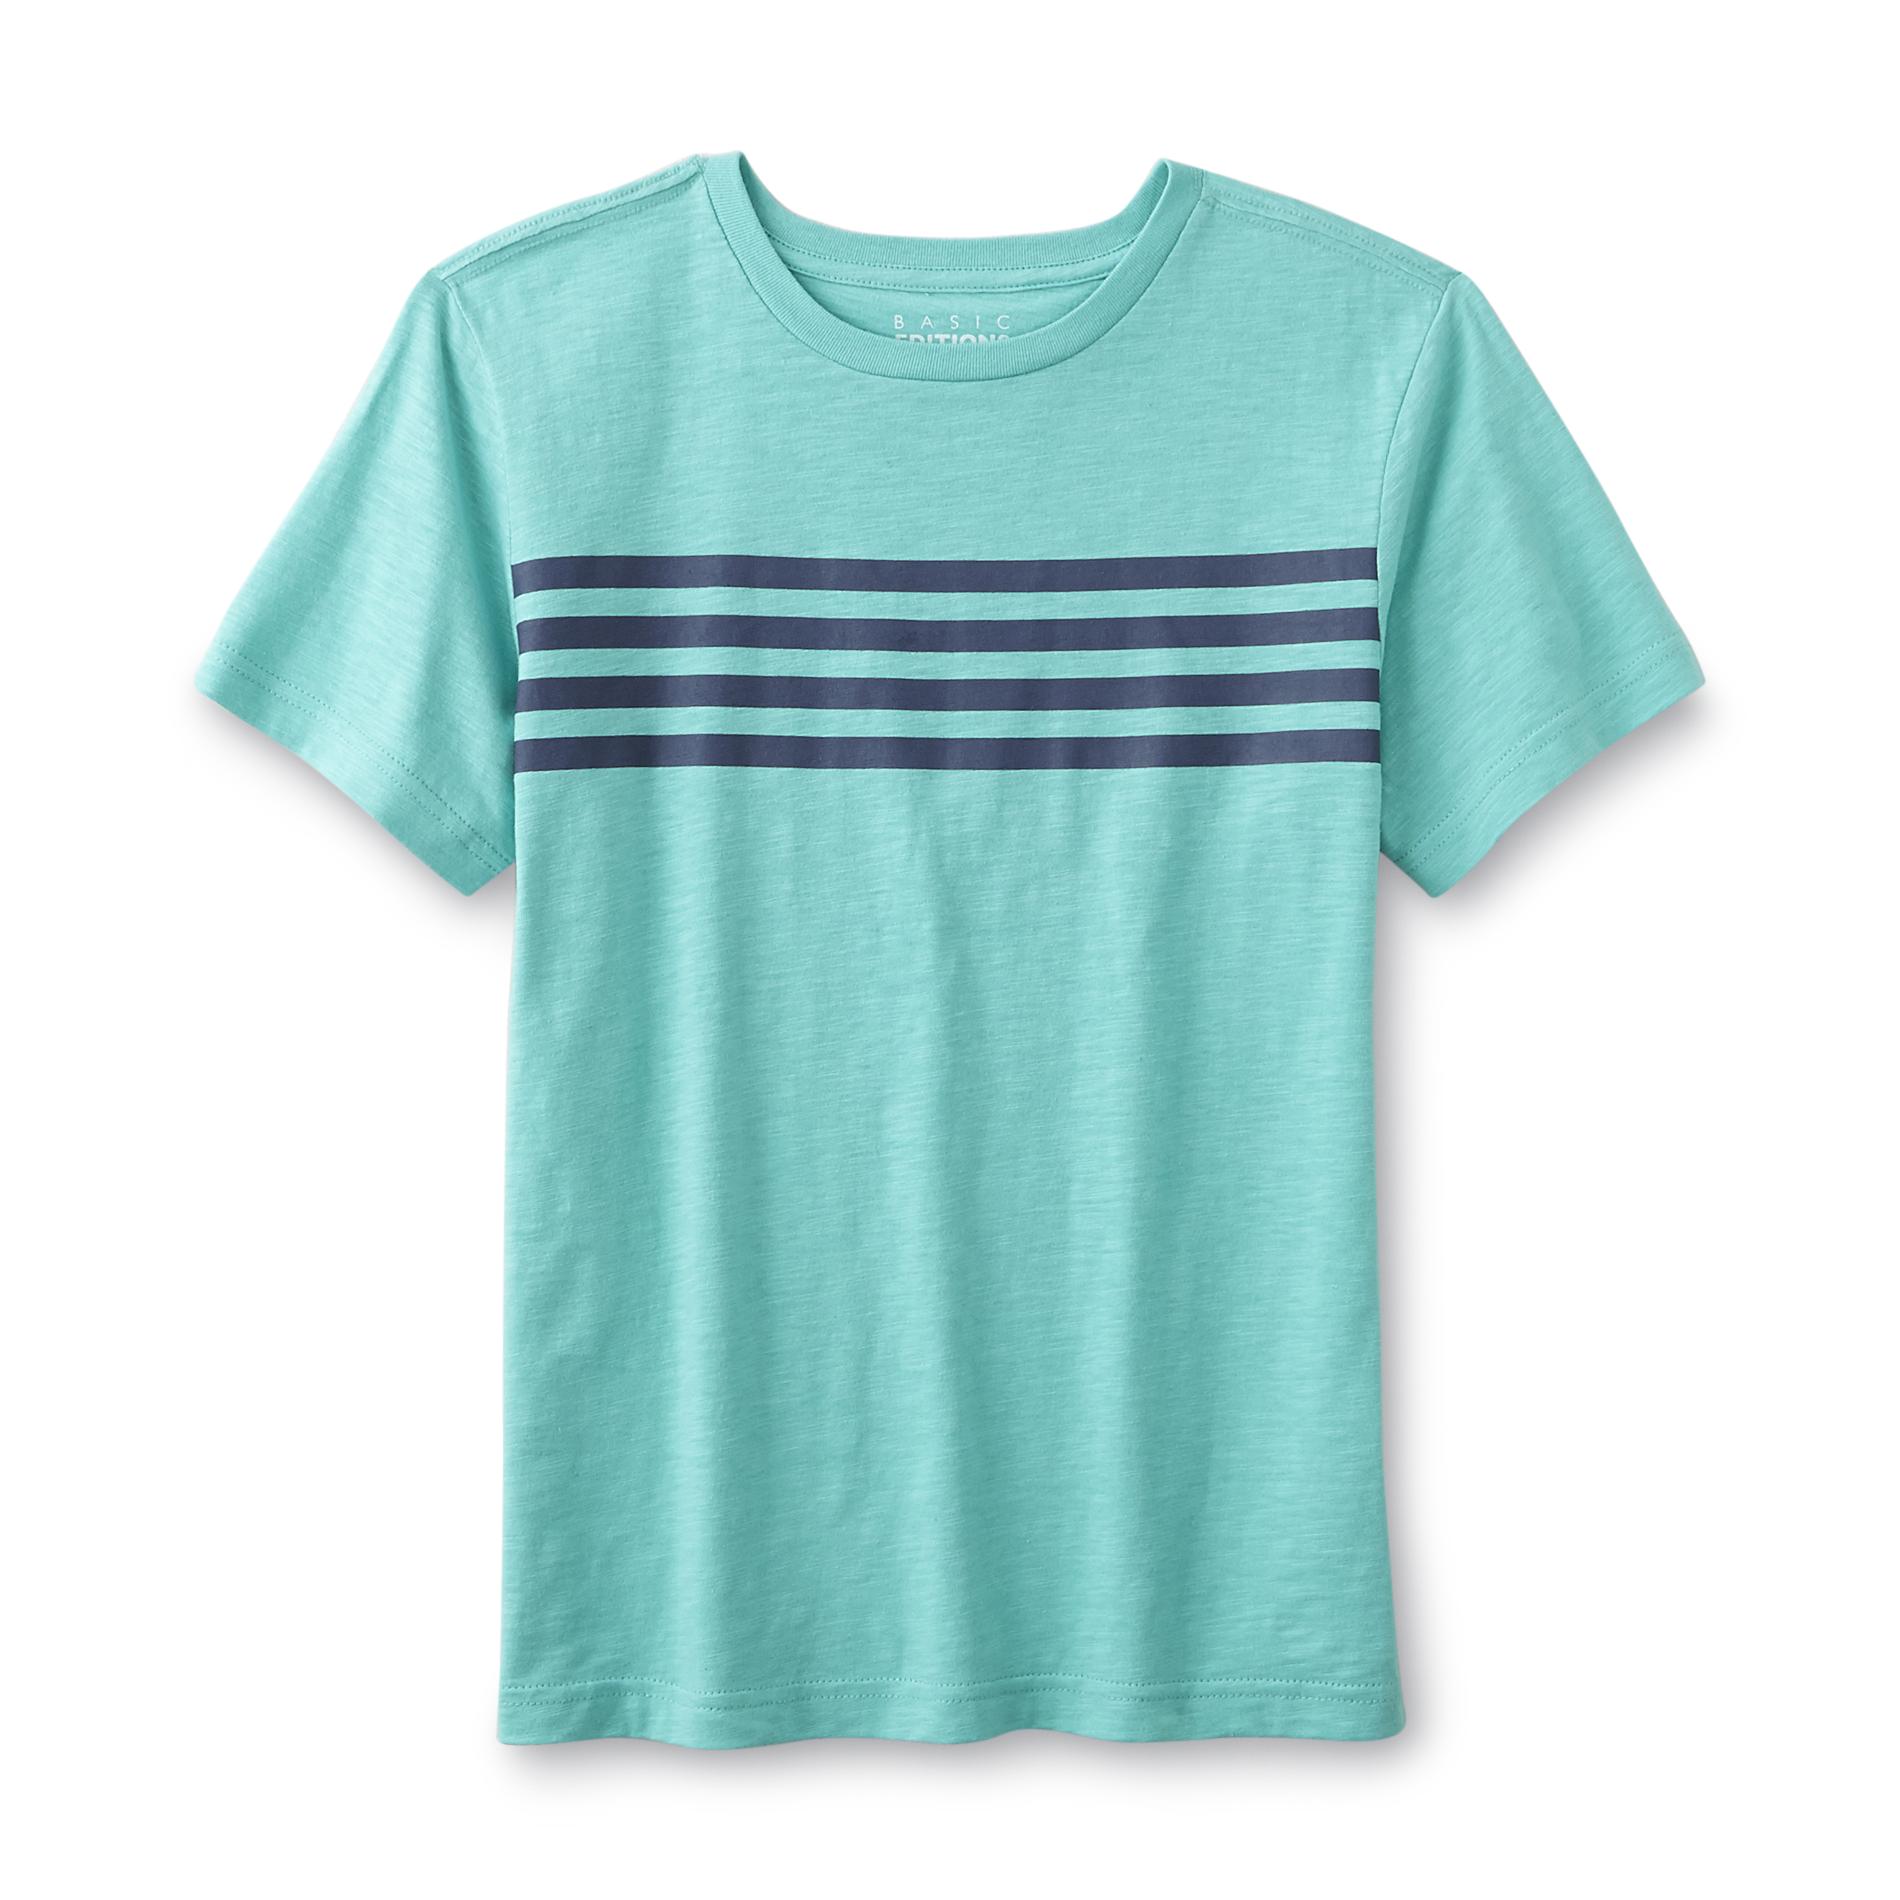 Boy's Short-Sleeve T-Shirt - Striped